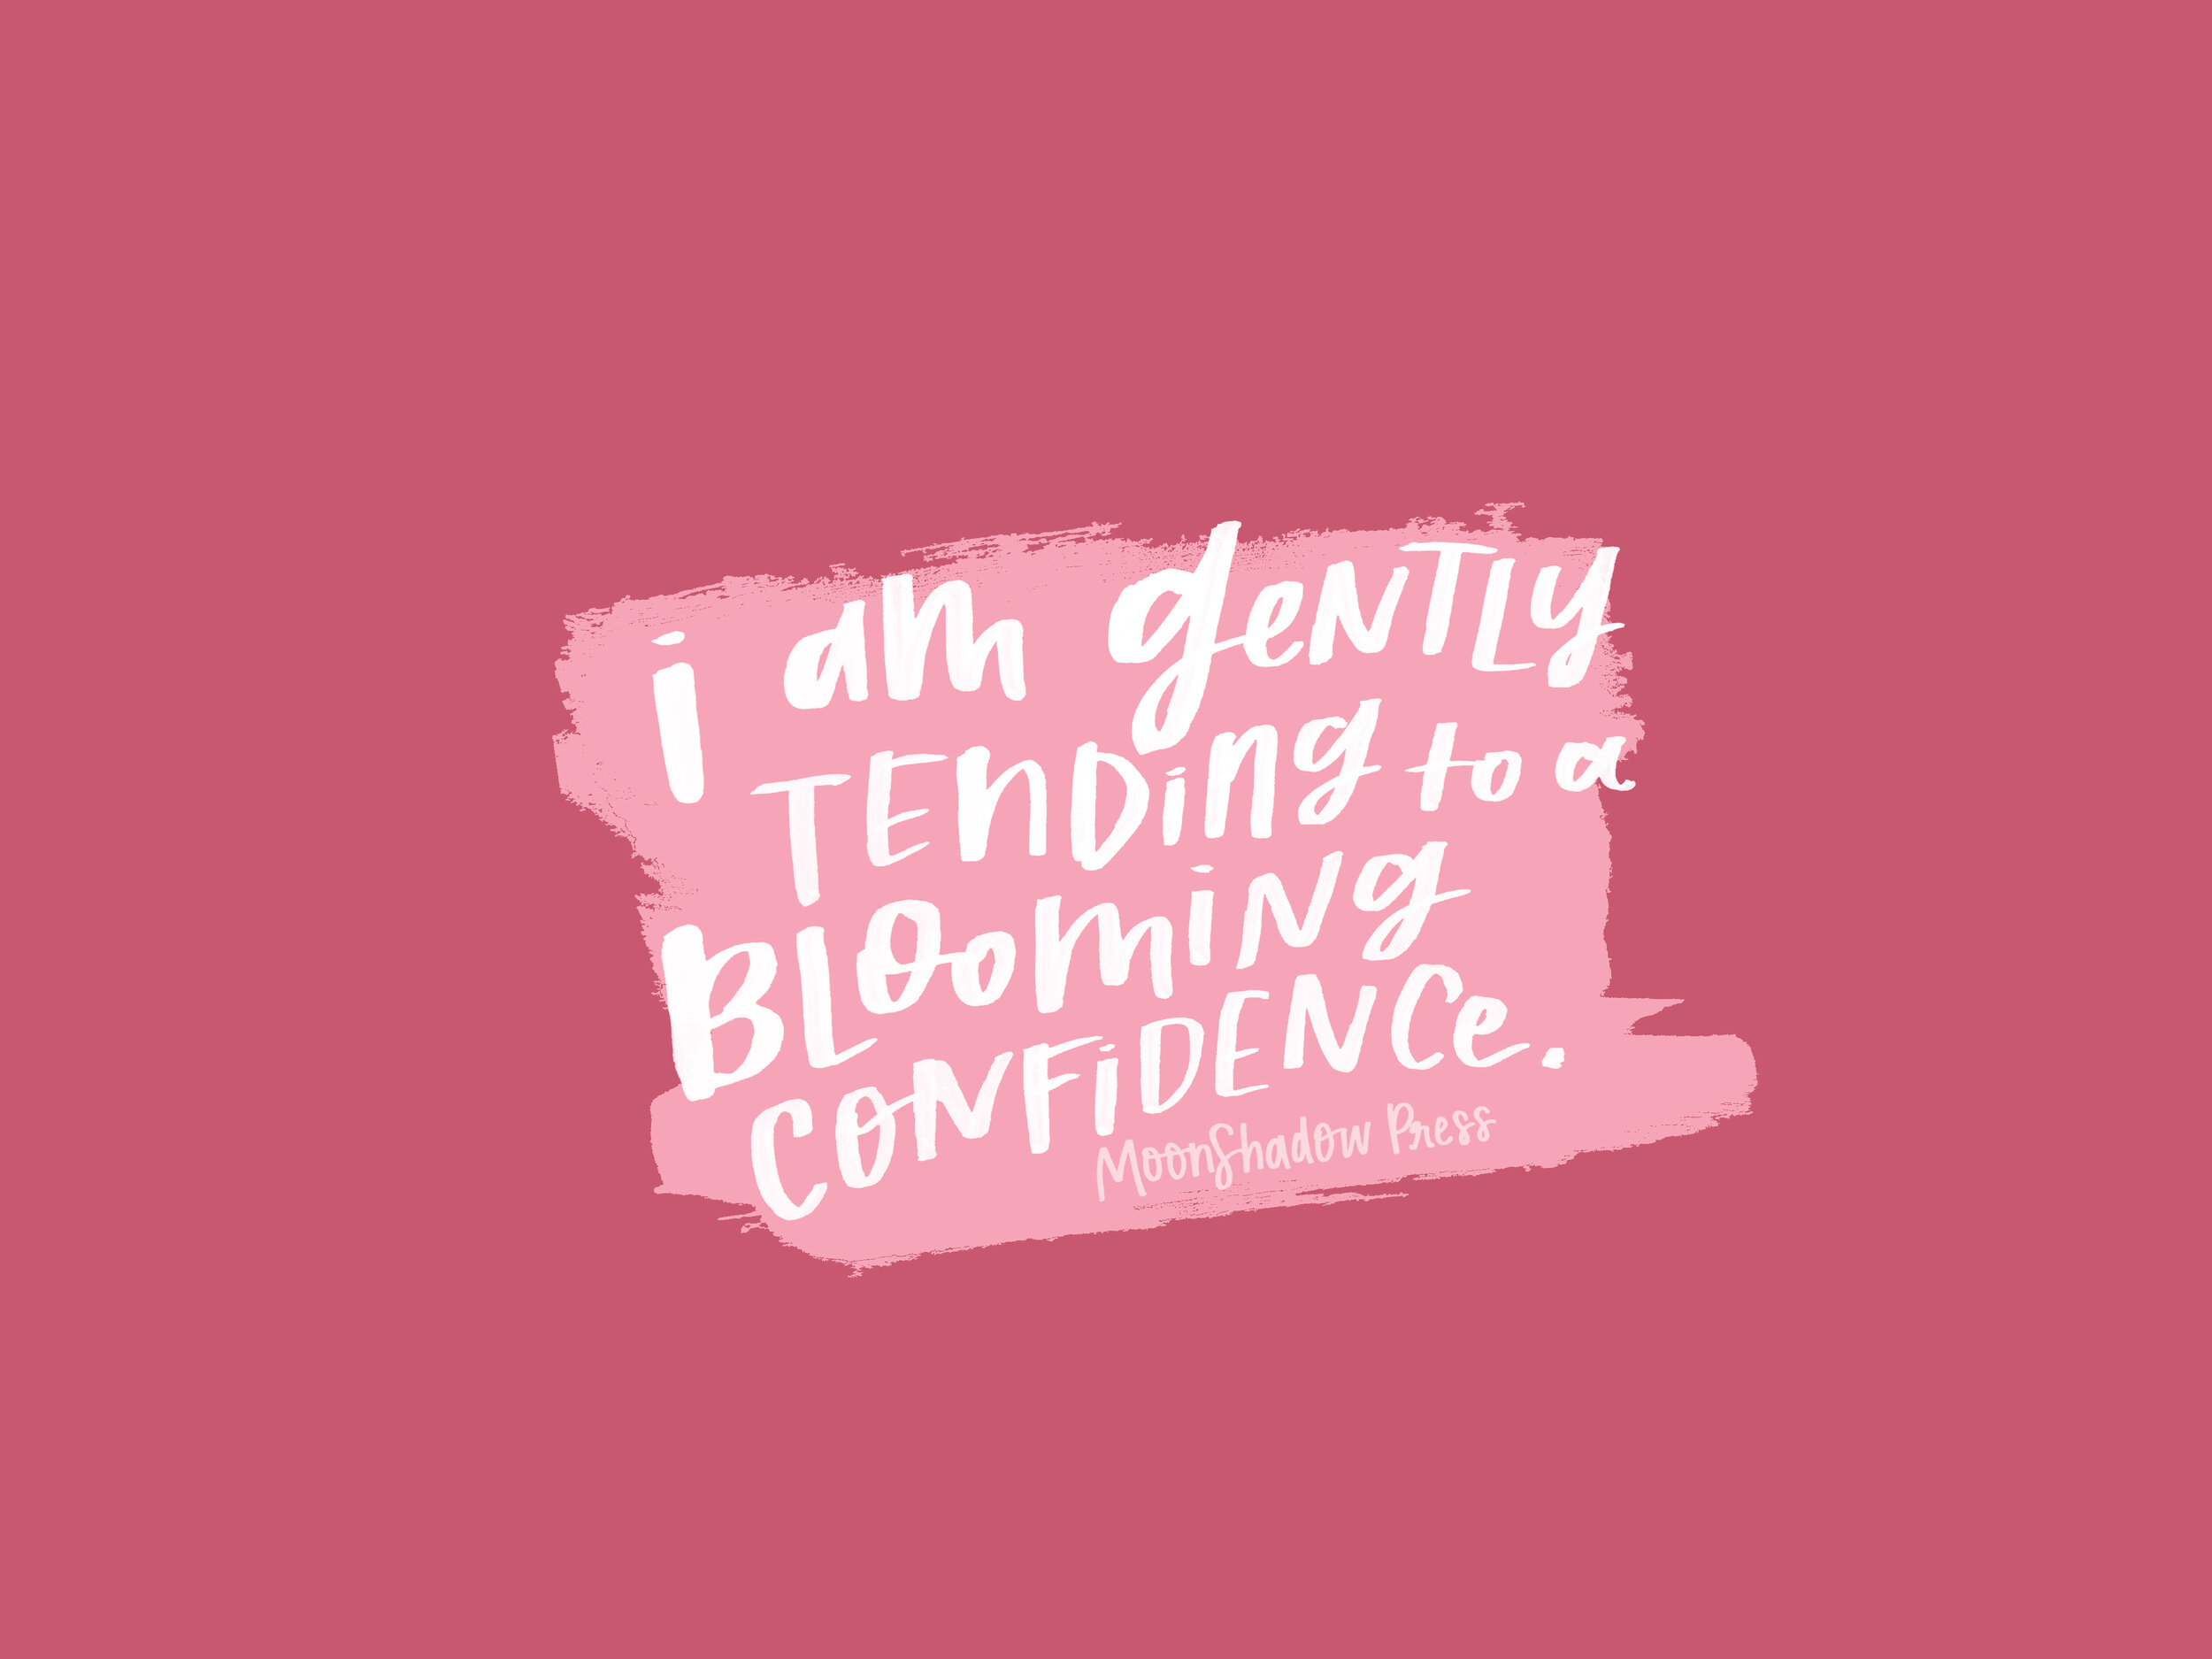 BloomingConfidence1bL.jpg